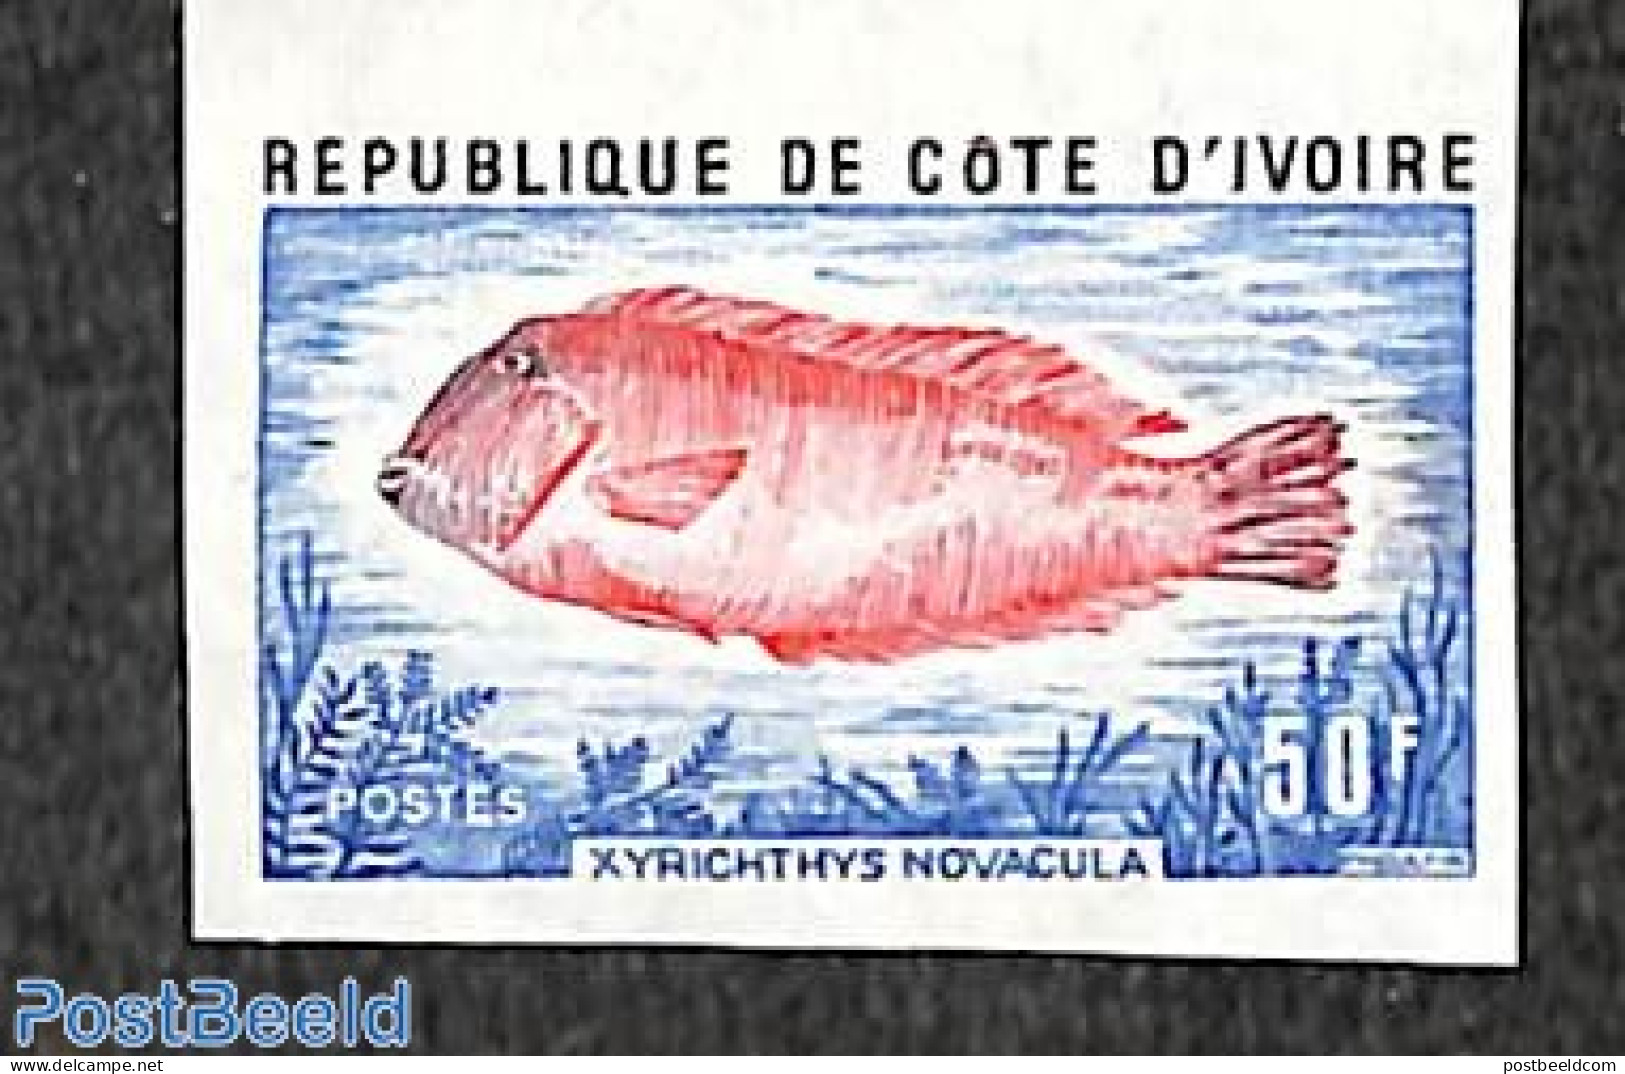 Ivory Coast 1973 Fish 1v, Imperforated, Mint NH, Nature - Fish - Ongebruikt